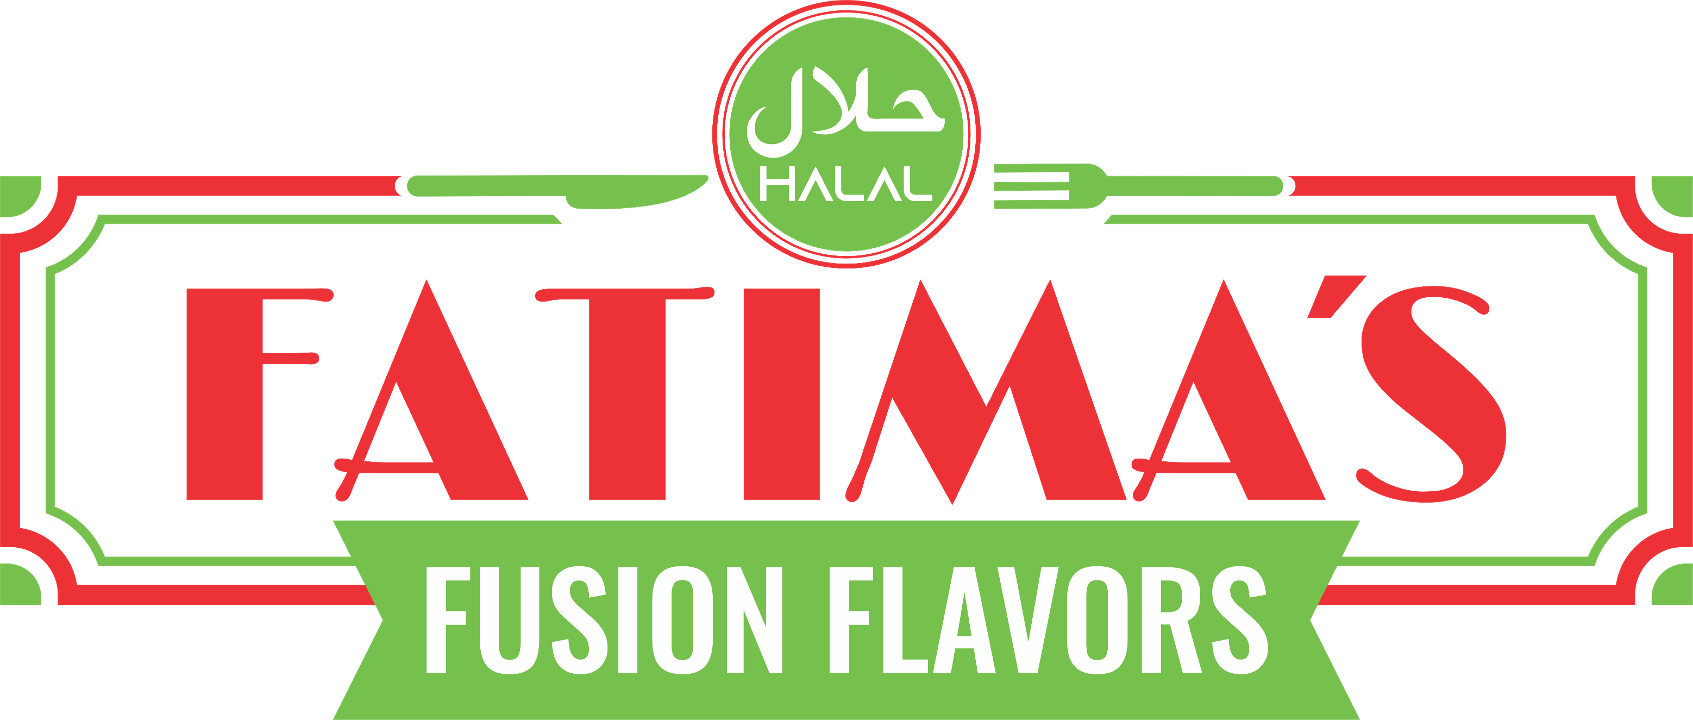 Fatima's Fusion Flavors 180 Spruce Street